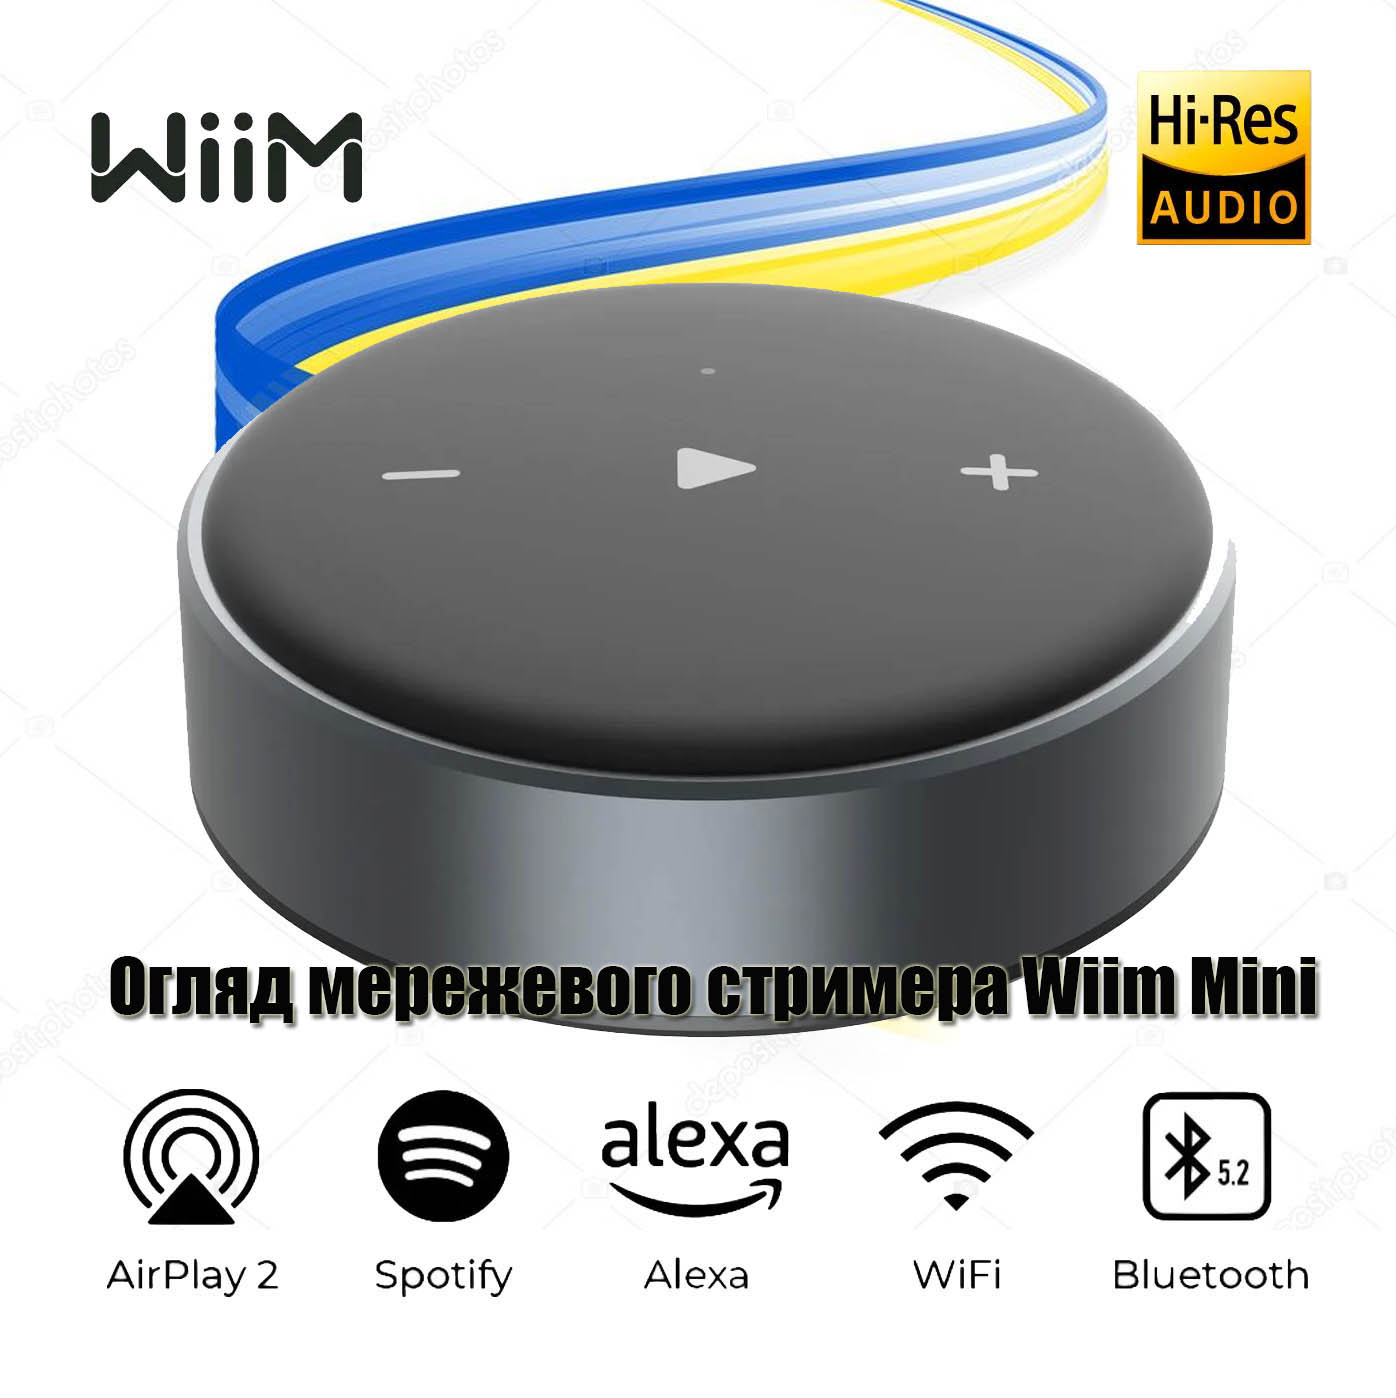  Огляд мережевого стримера Wiim Mini hifi-club.com.ua